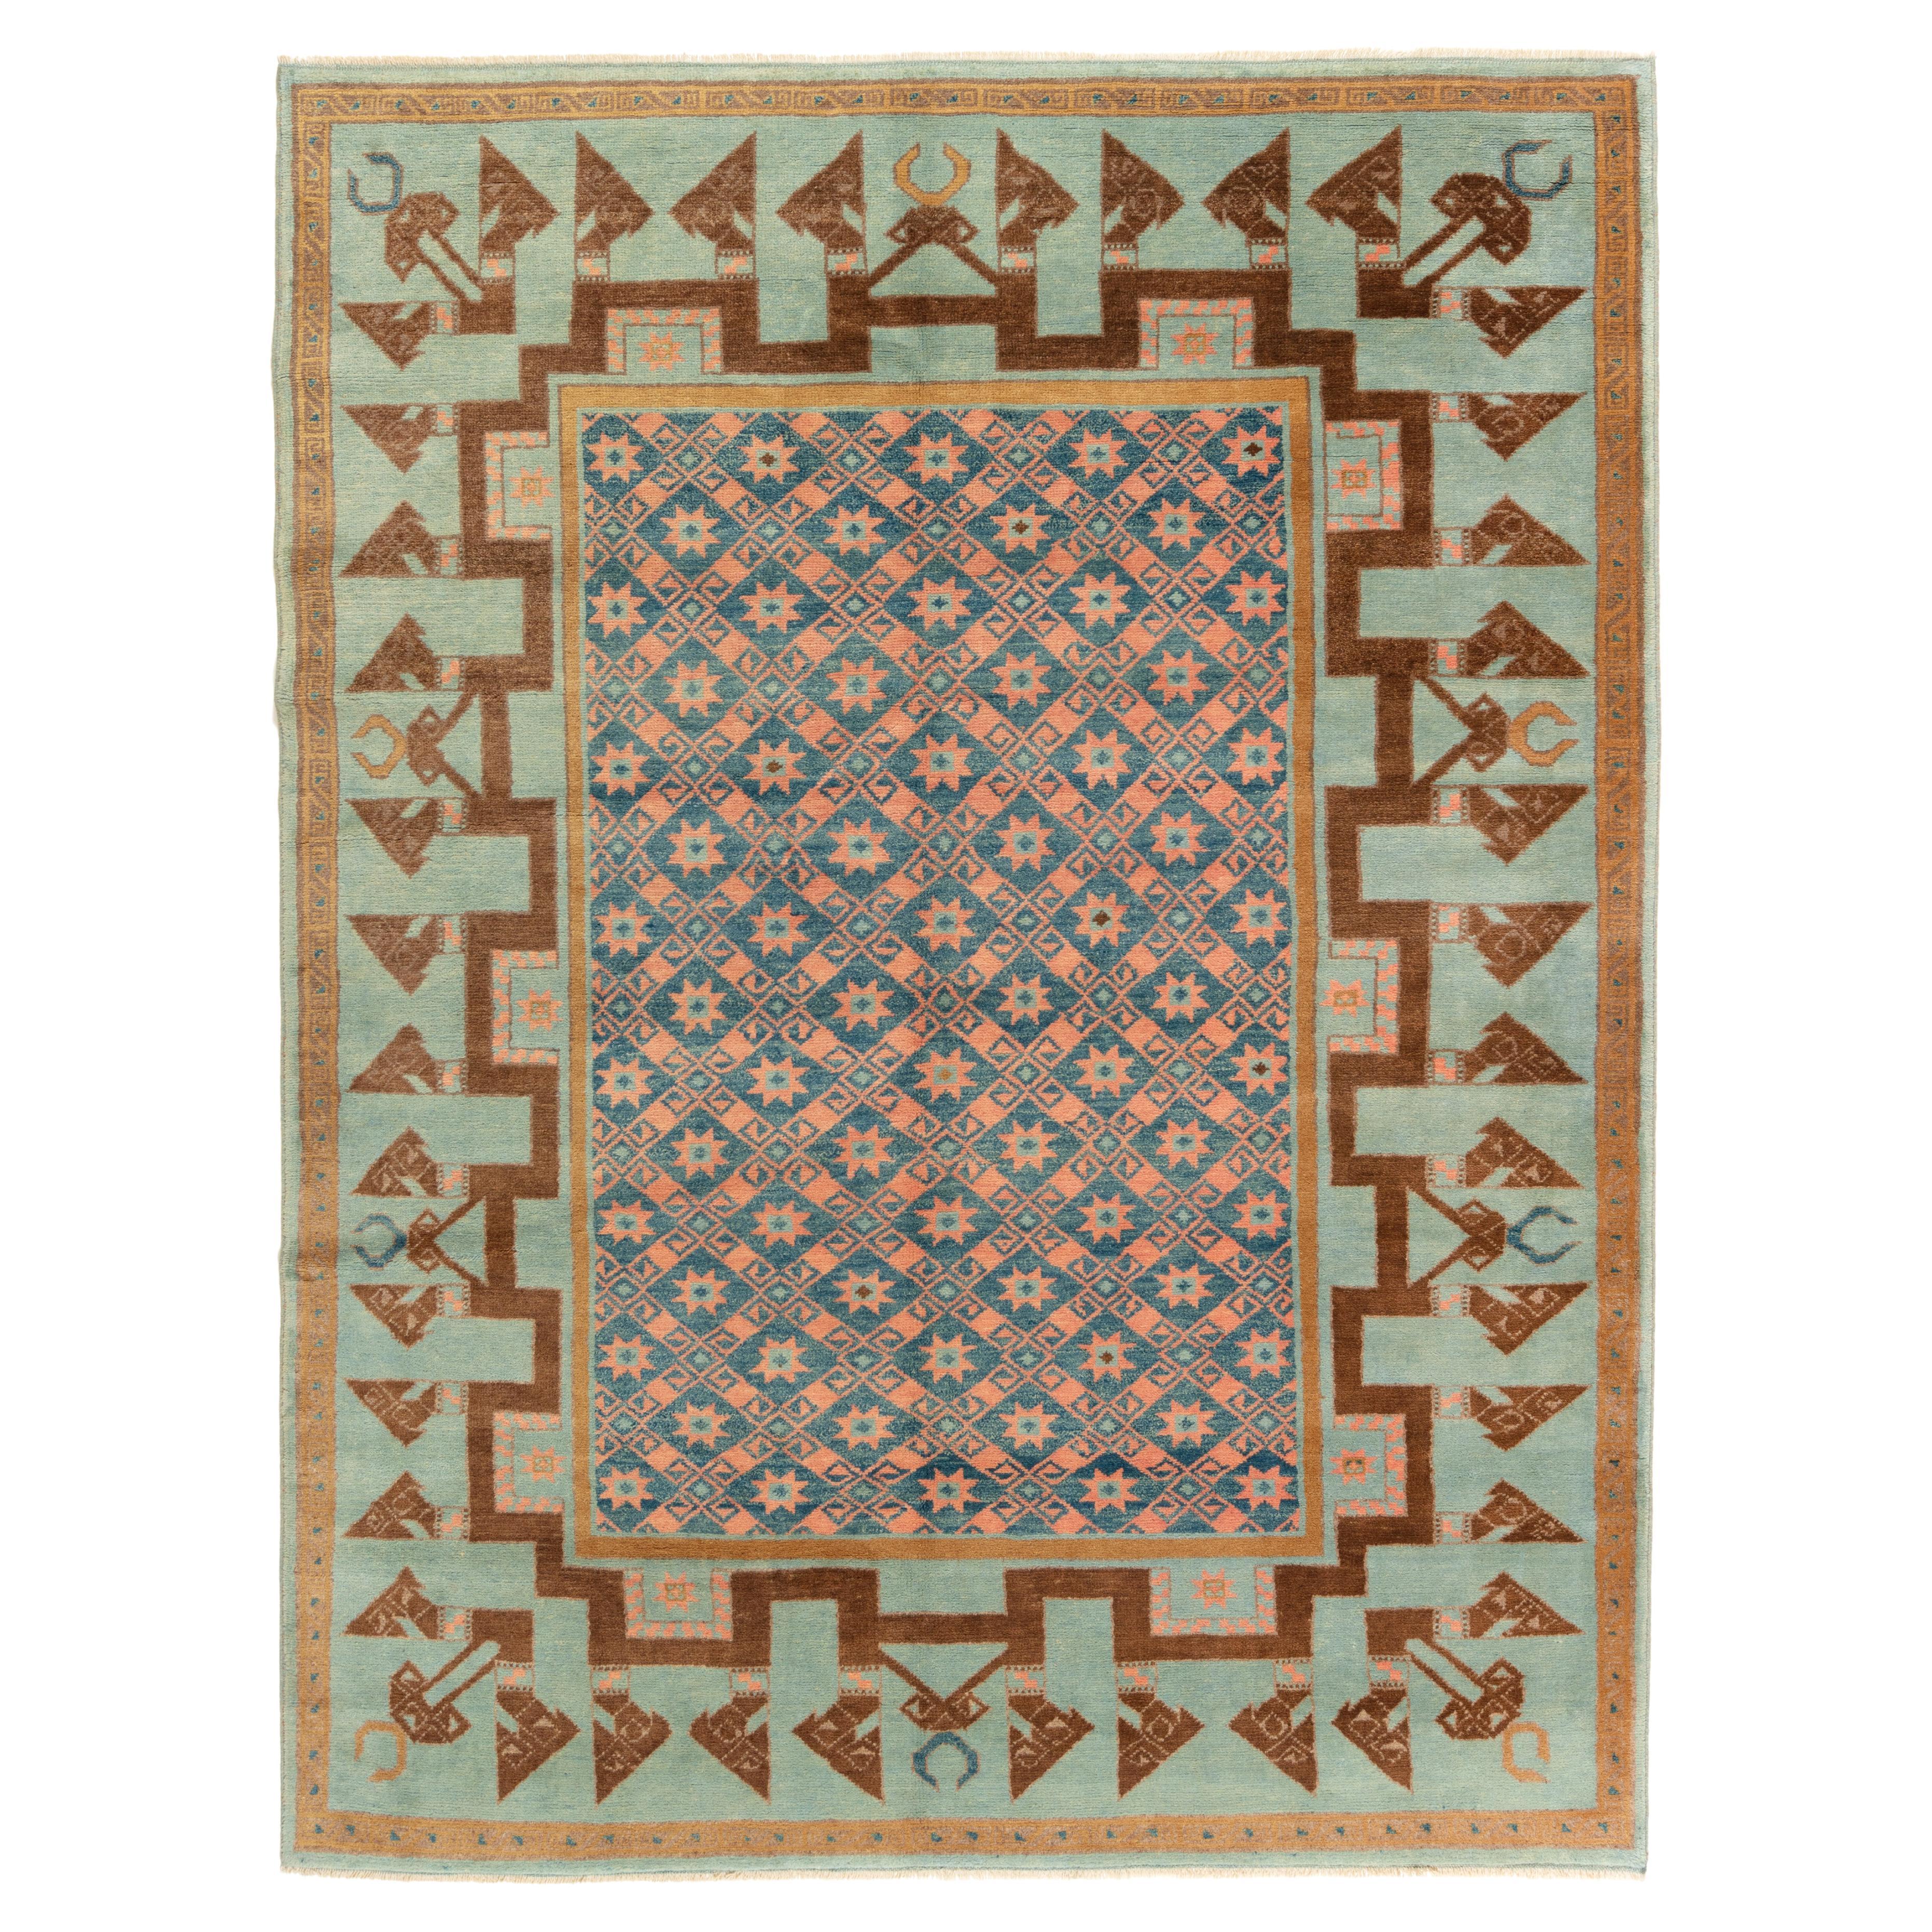 Ararat Rugs the Esrefoglu Mosque Stars in Lattice Carpet Anatolian Natural Dyed For Sale